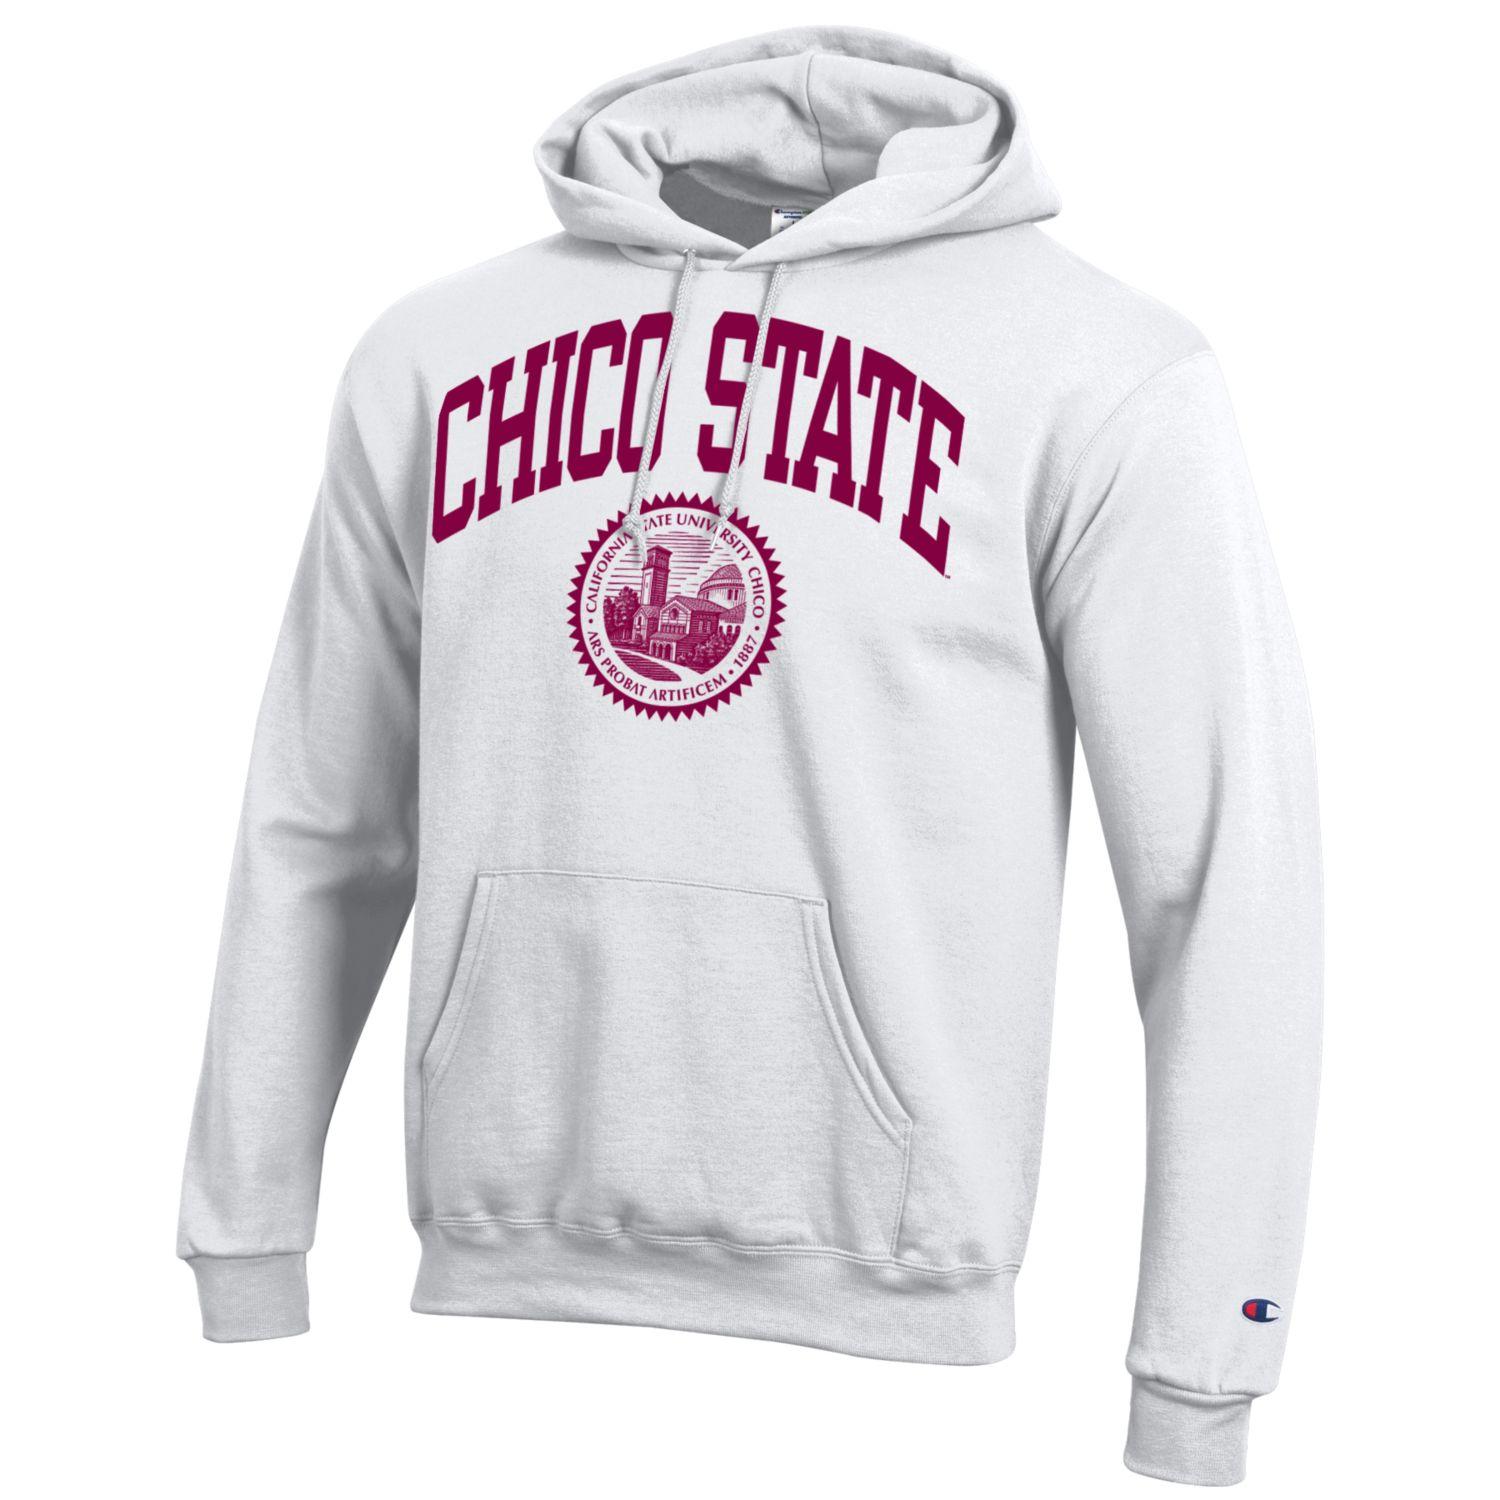 Chico State University Wildcats Champion hoodie sweatshirt-White-Shop College Wear